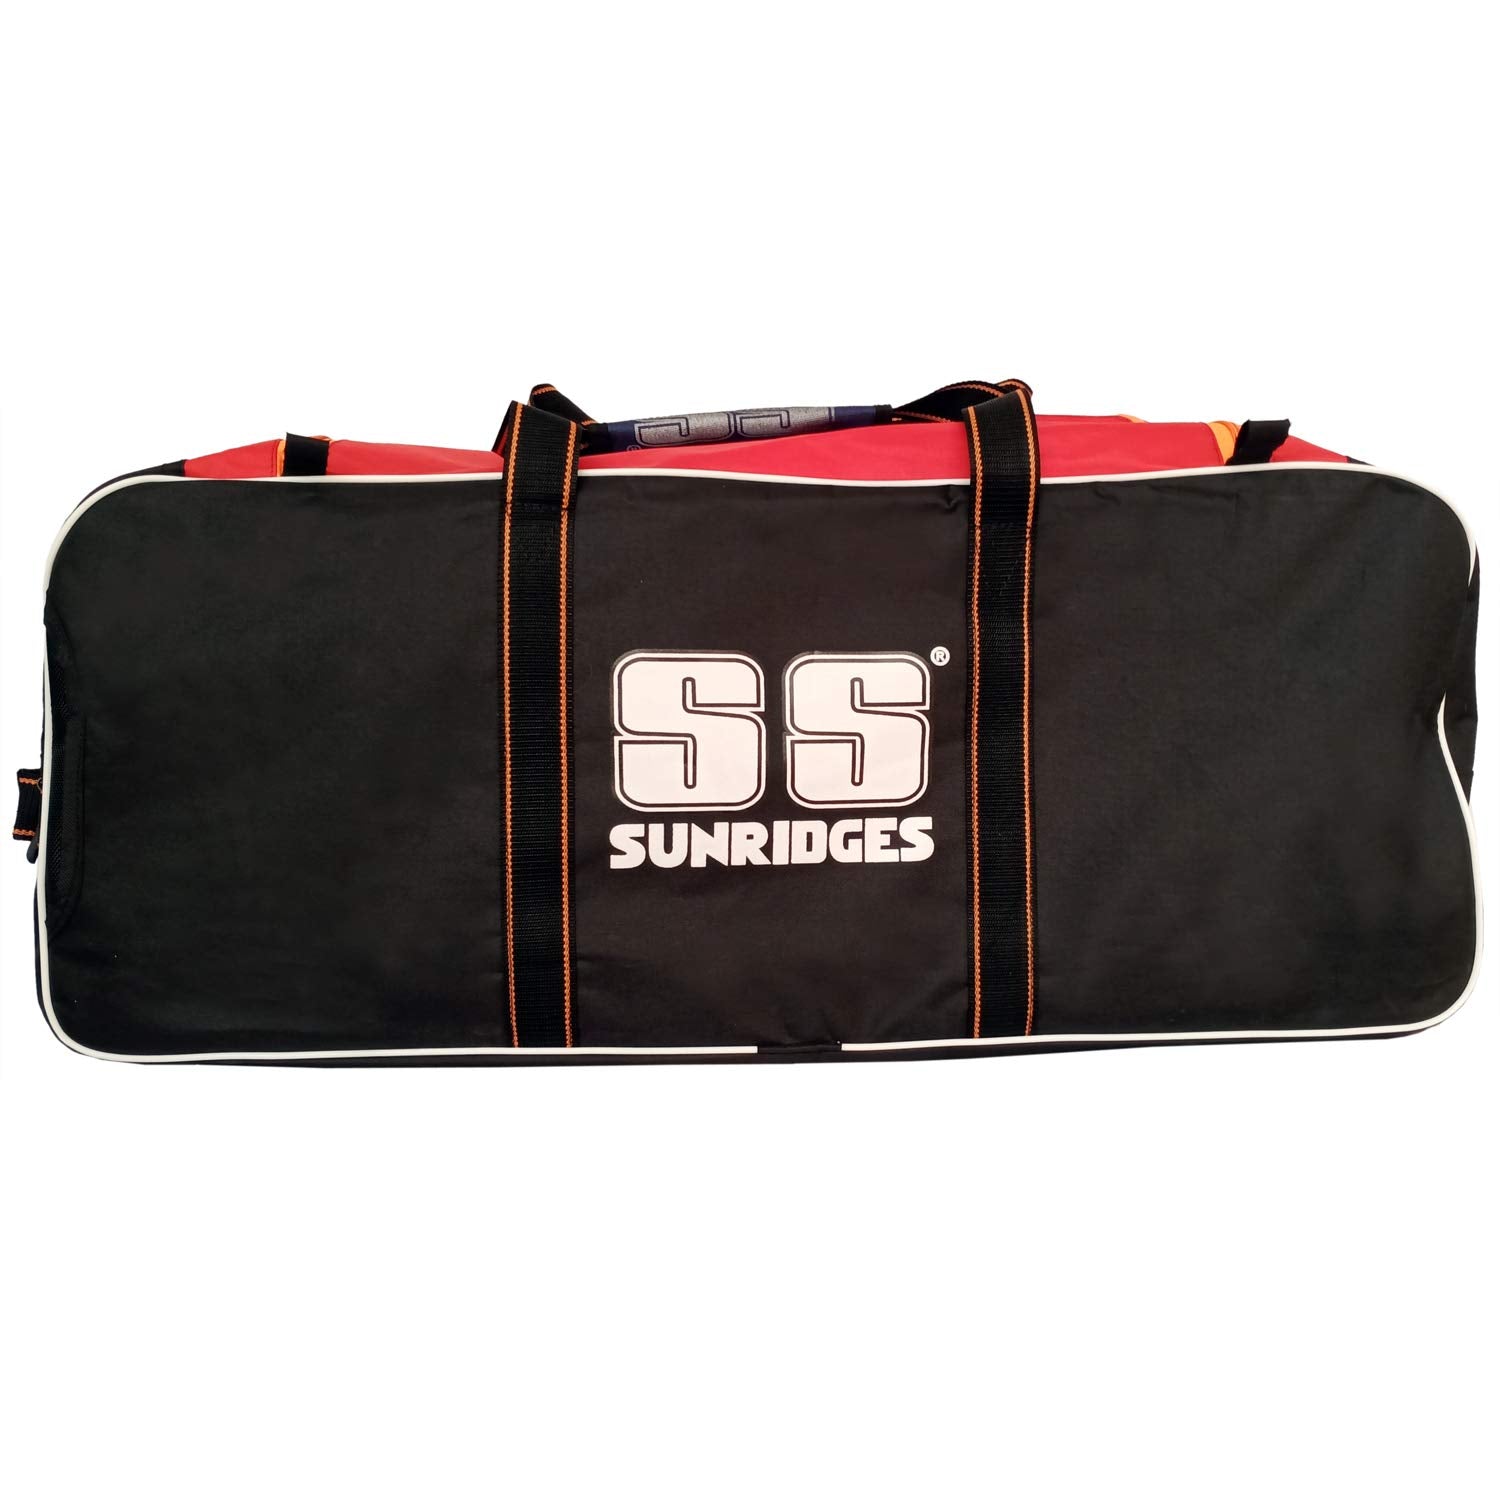 SS Blast Cricket Kit Bag with Wheels - Red/Black - Best Price online Prokicksports.com